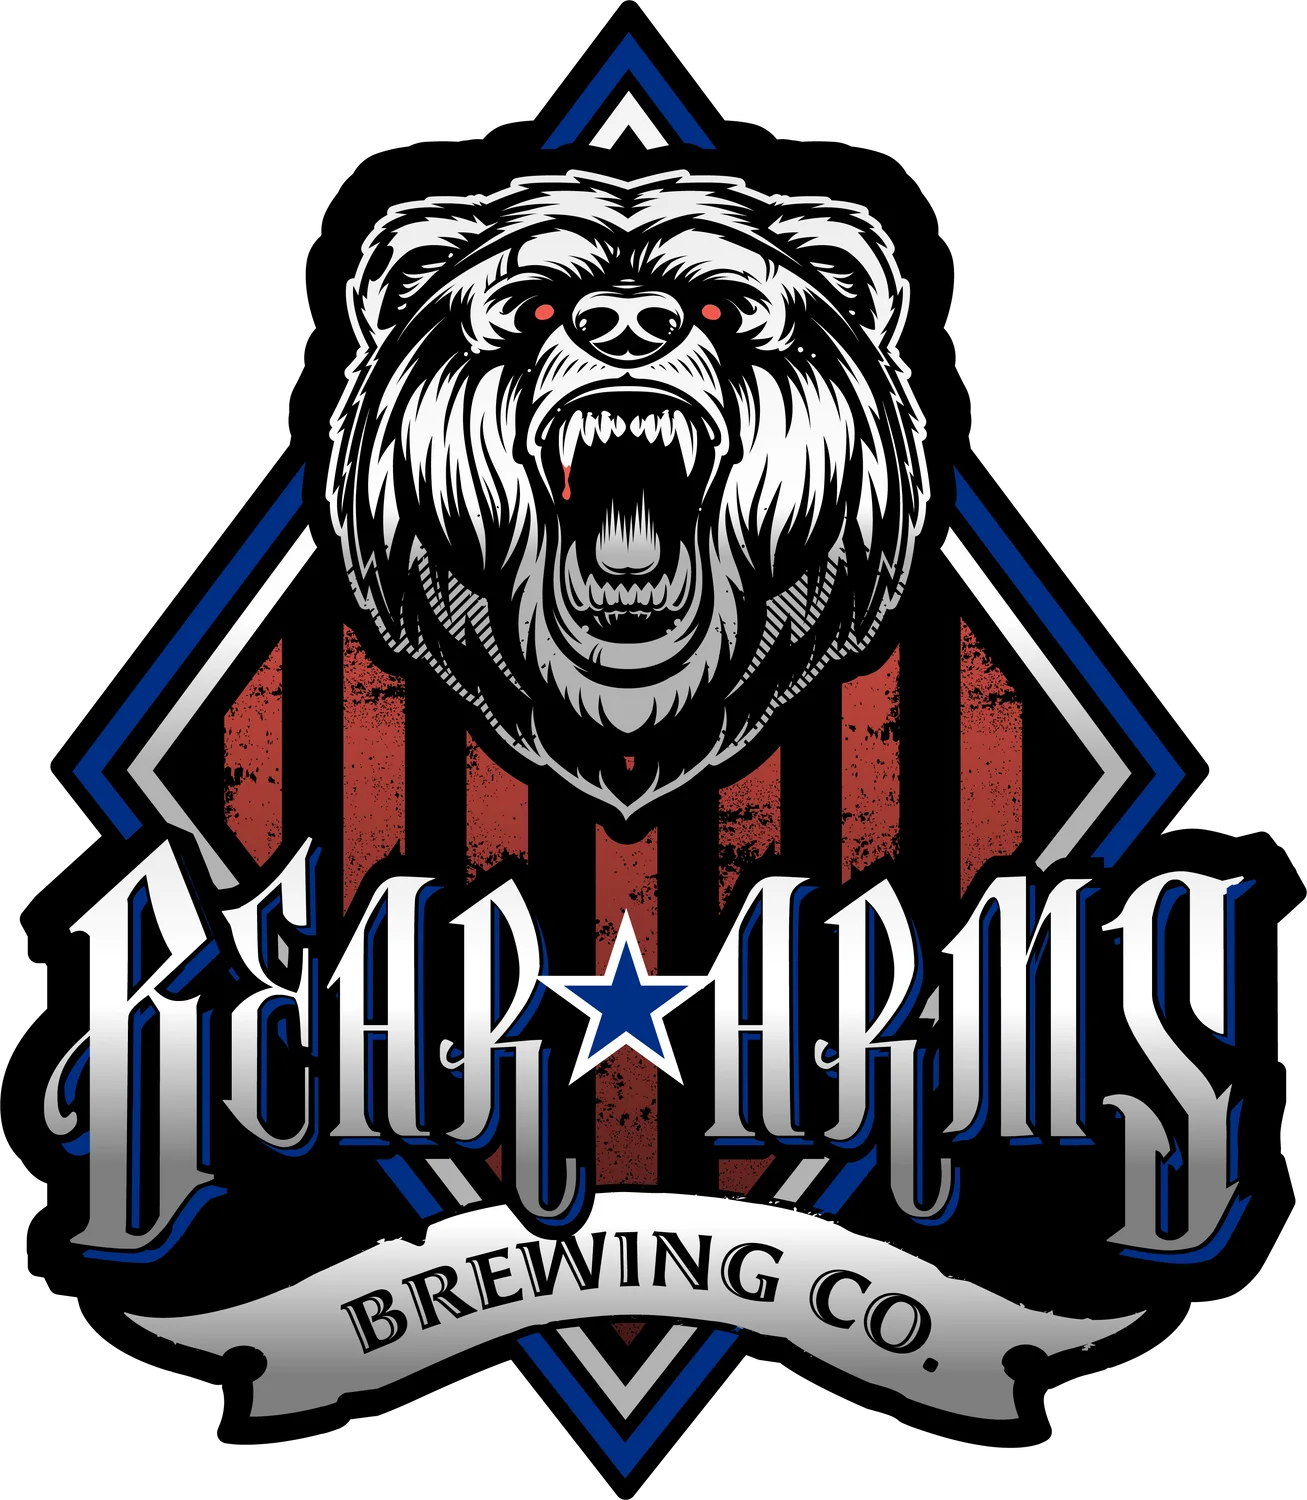 Bear Arms Brewing Company Logo